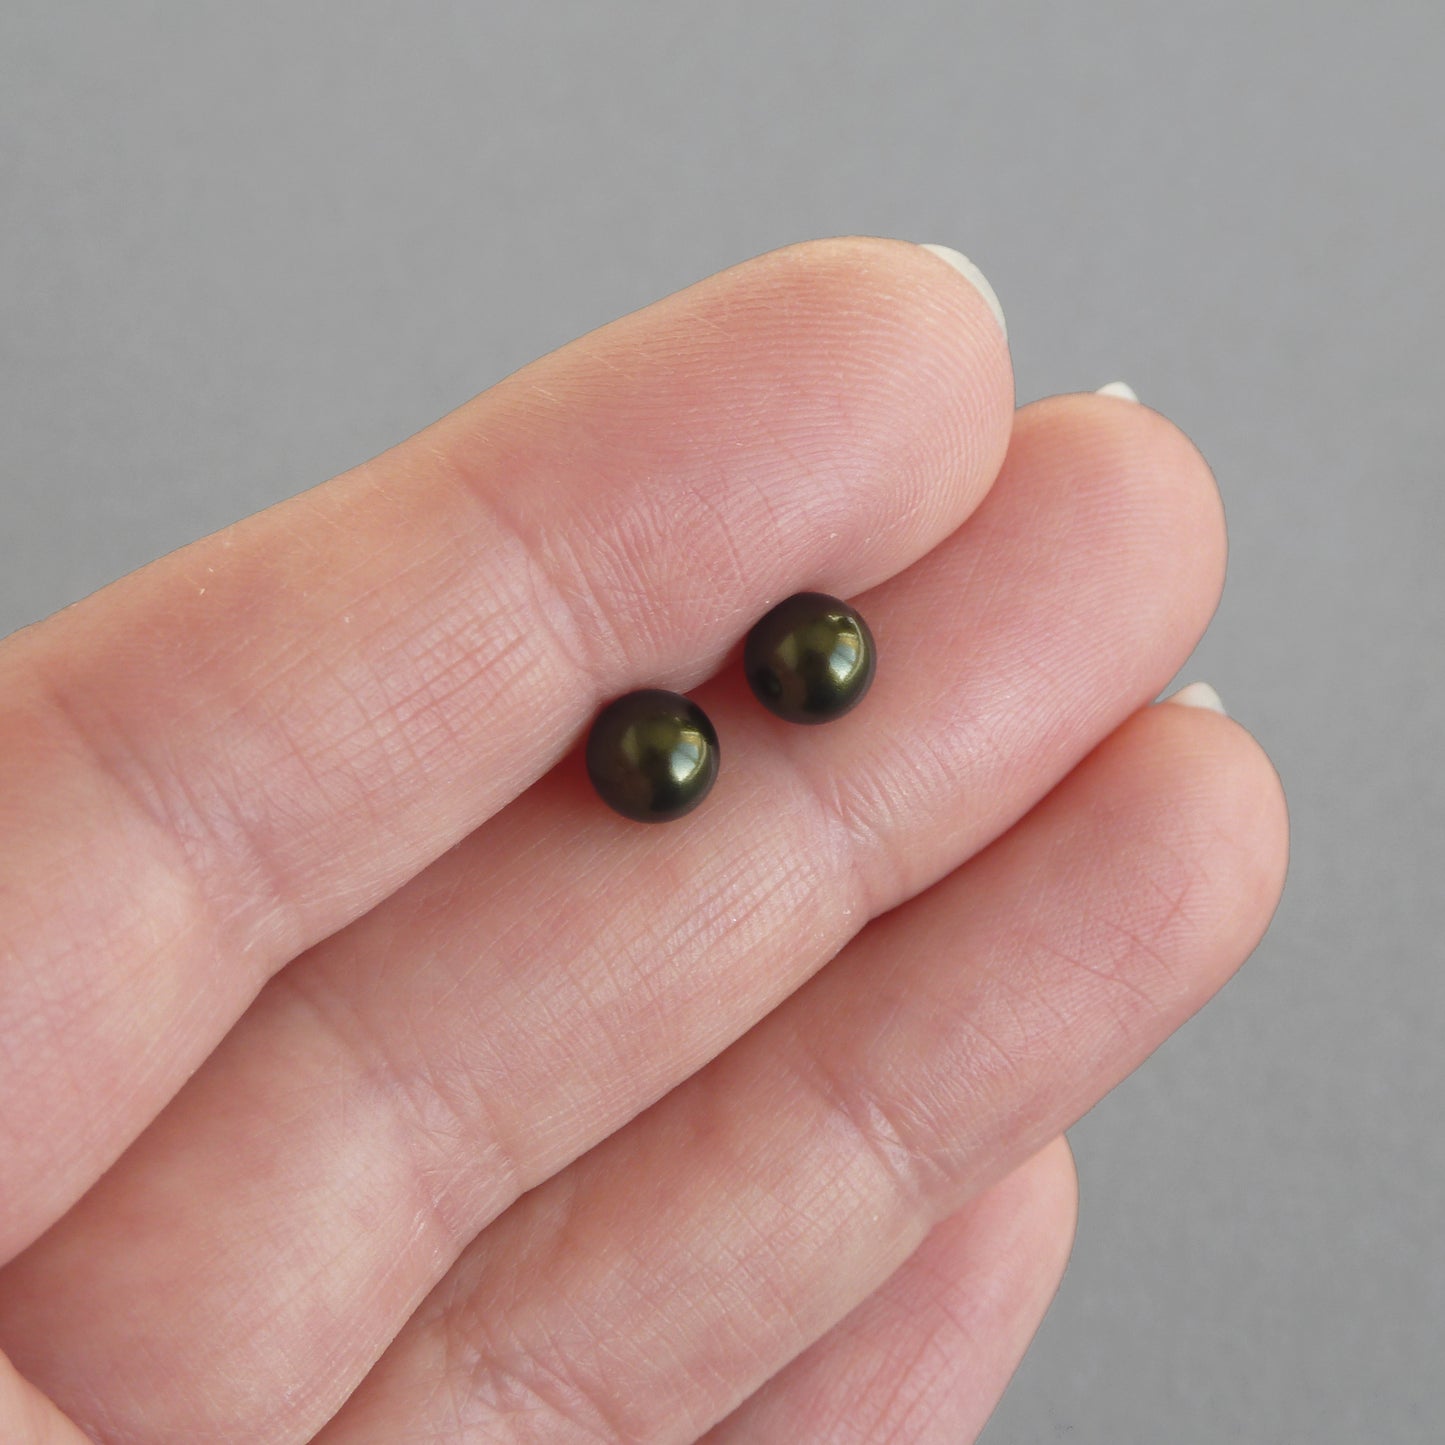 Small dark green stud earrings